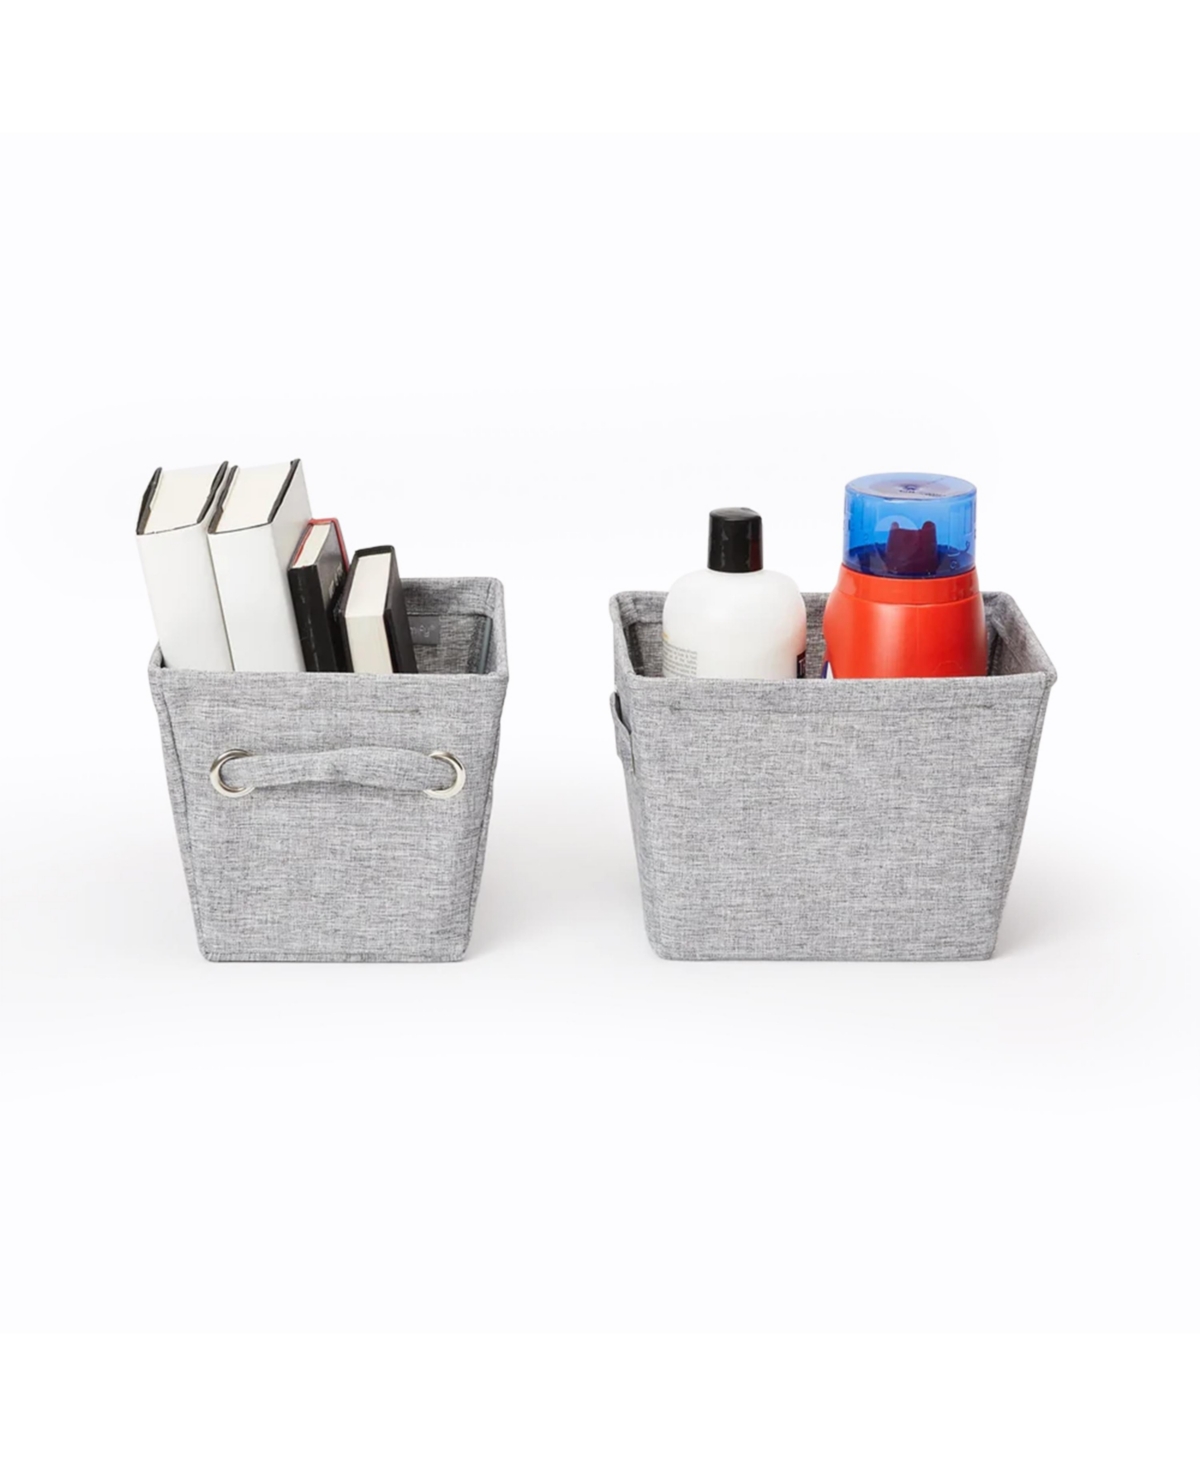 Isla Standard Shelf Bins, Set of 2, Versatile and Convenient - Isla grey